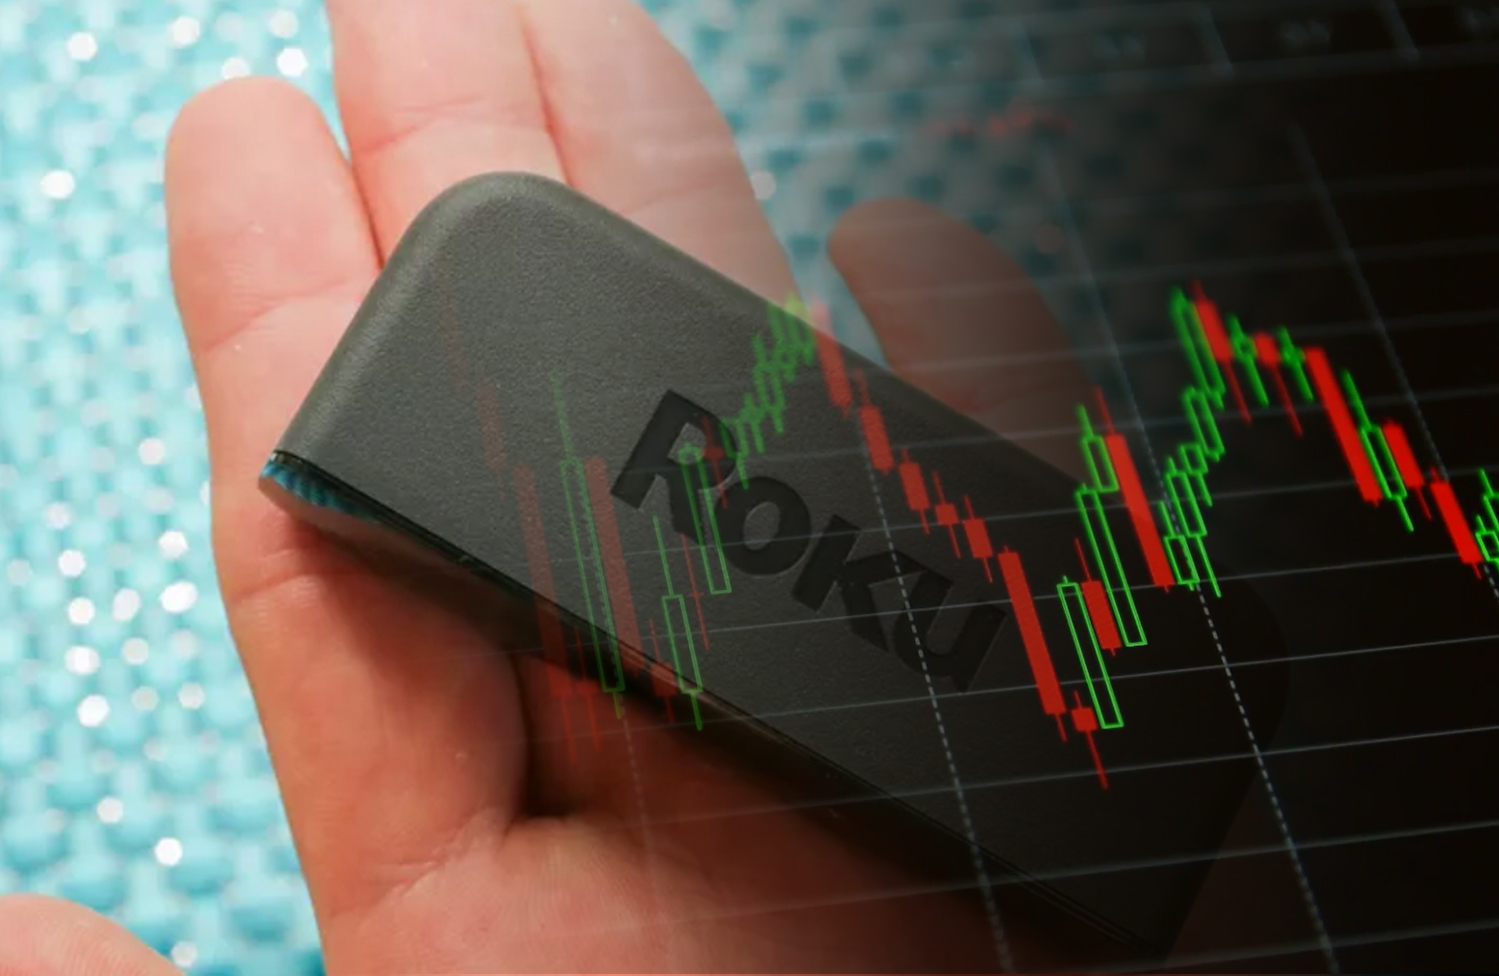 ROKU stock price movement